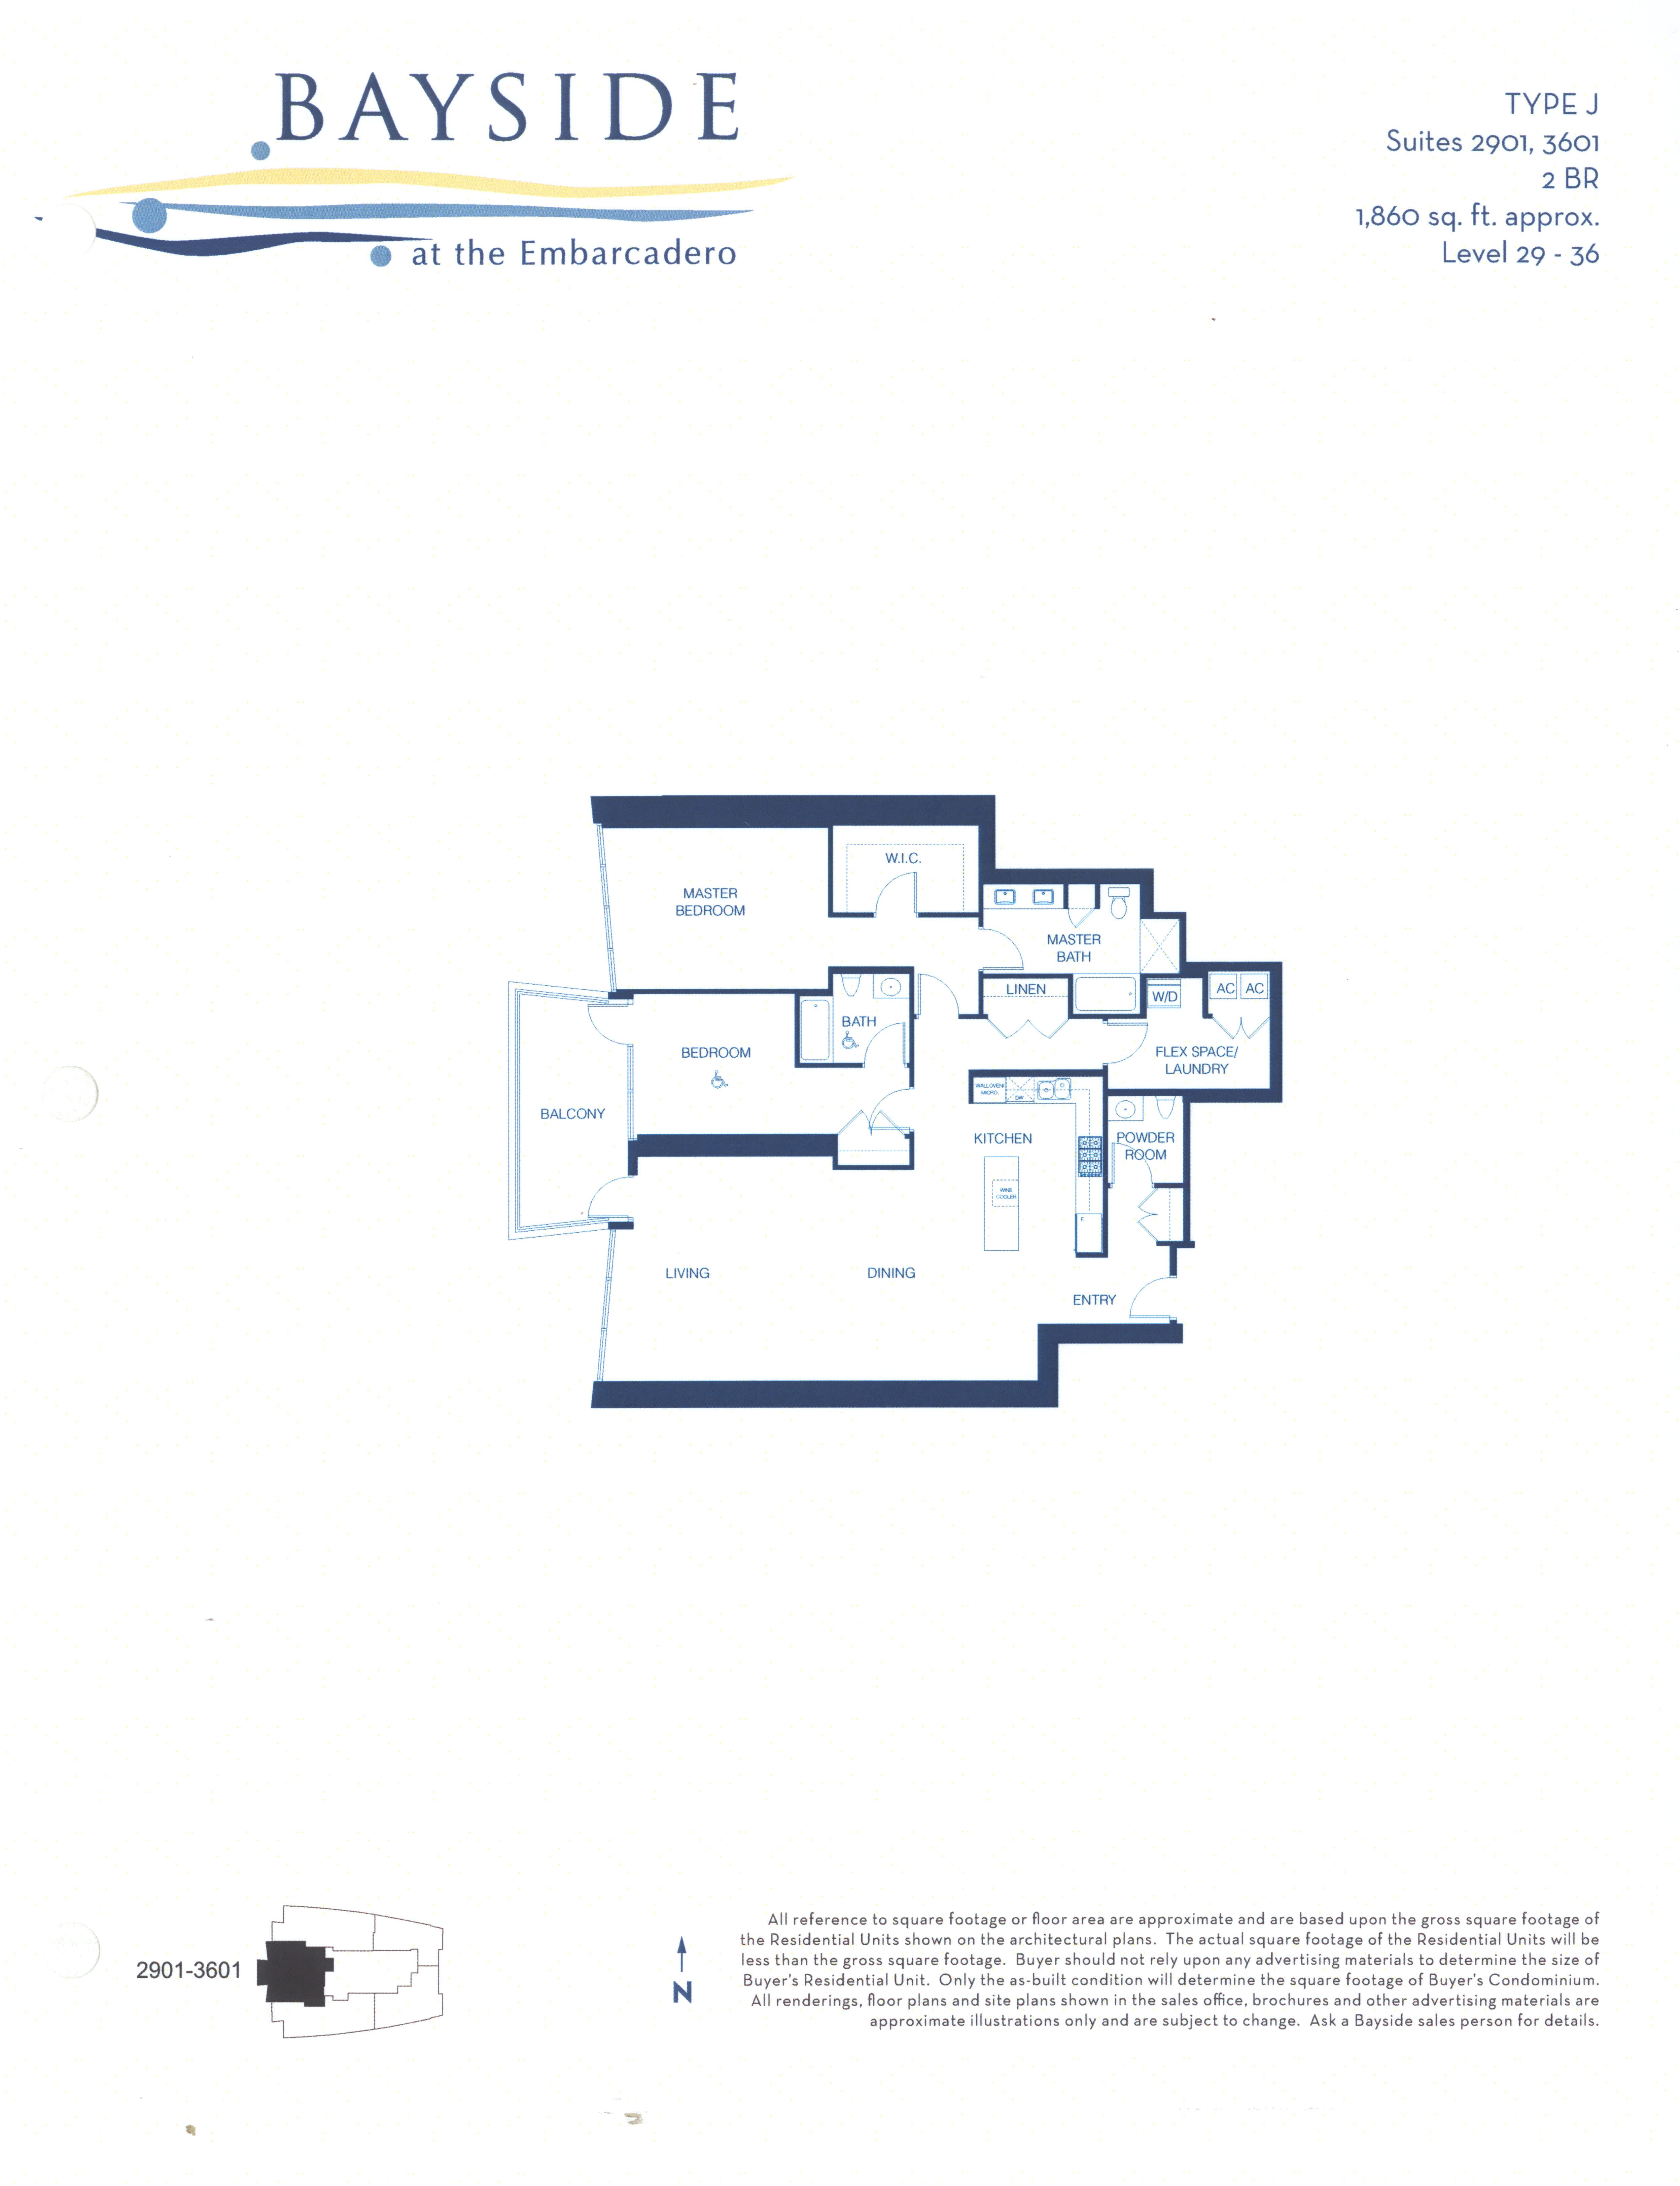 Bayside Floor Plan Level 29-36 Type J